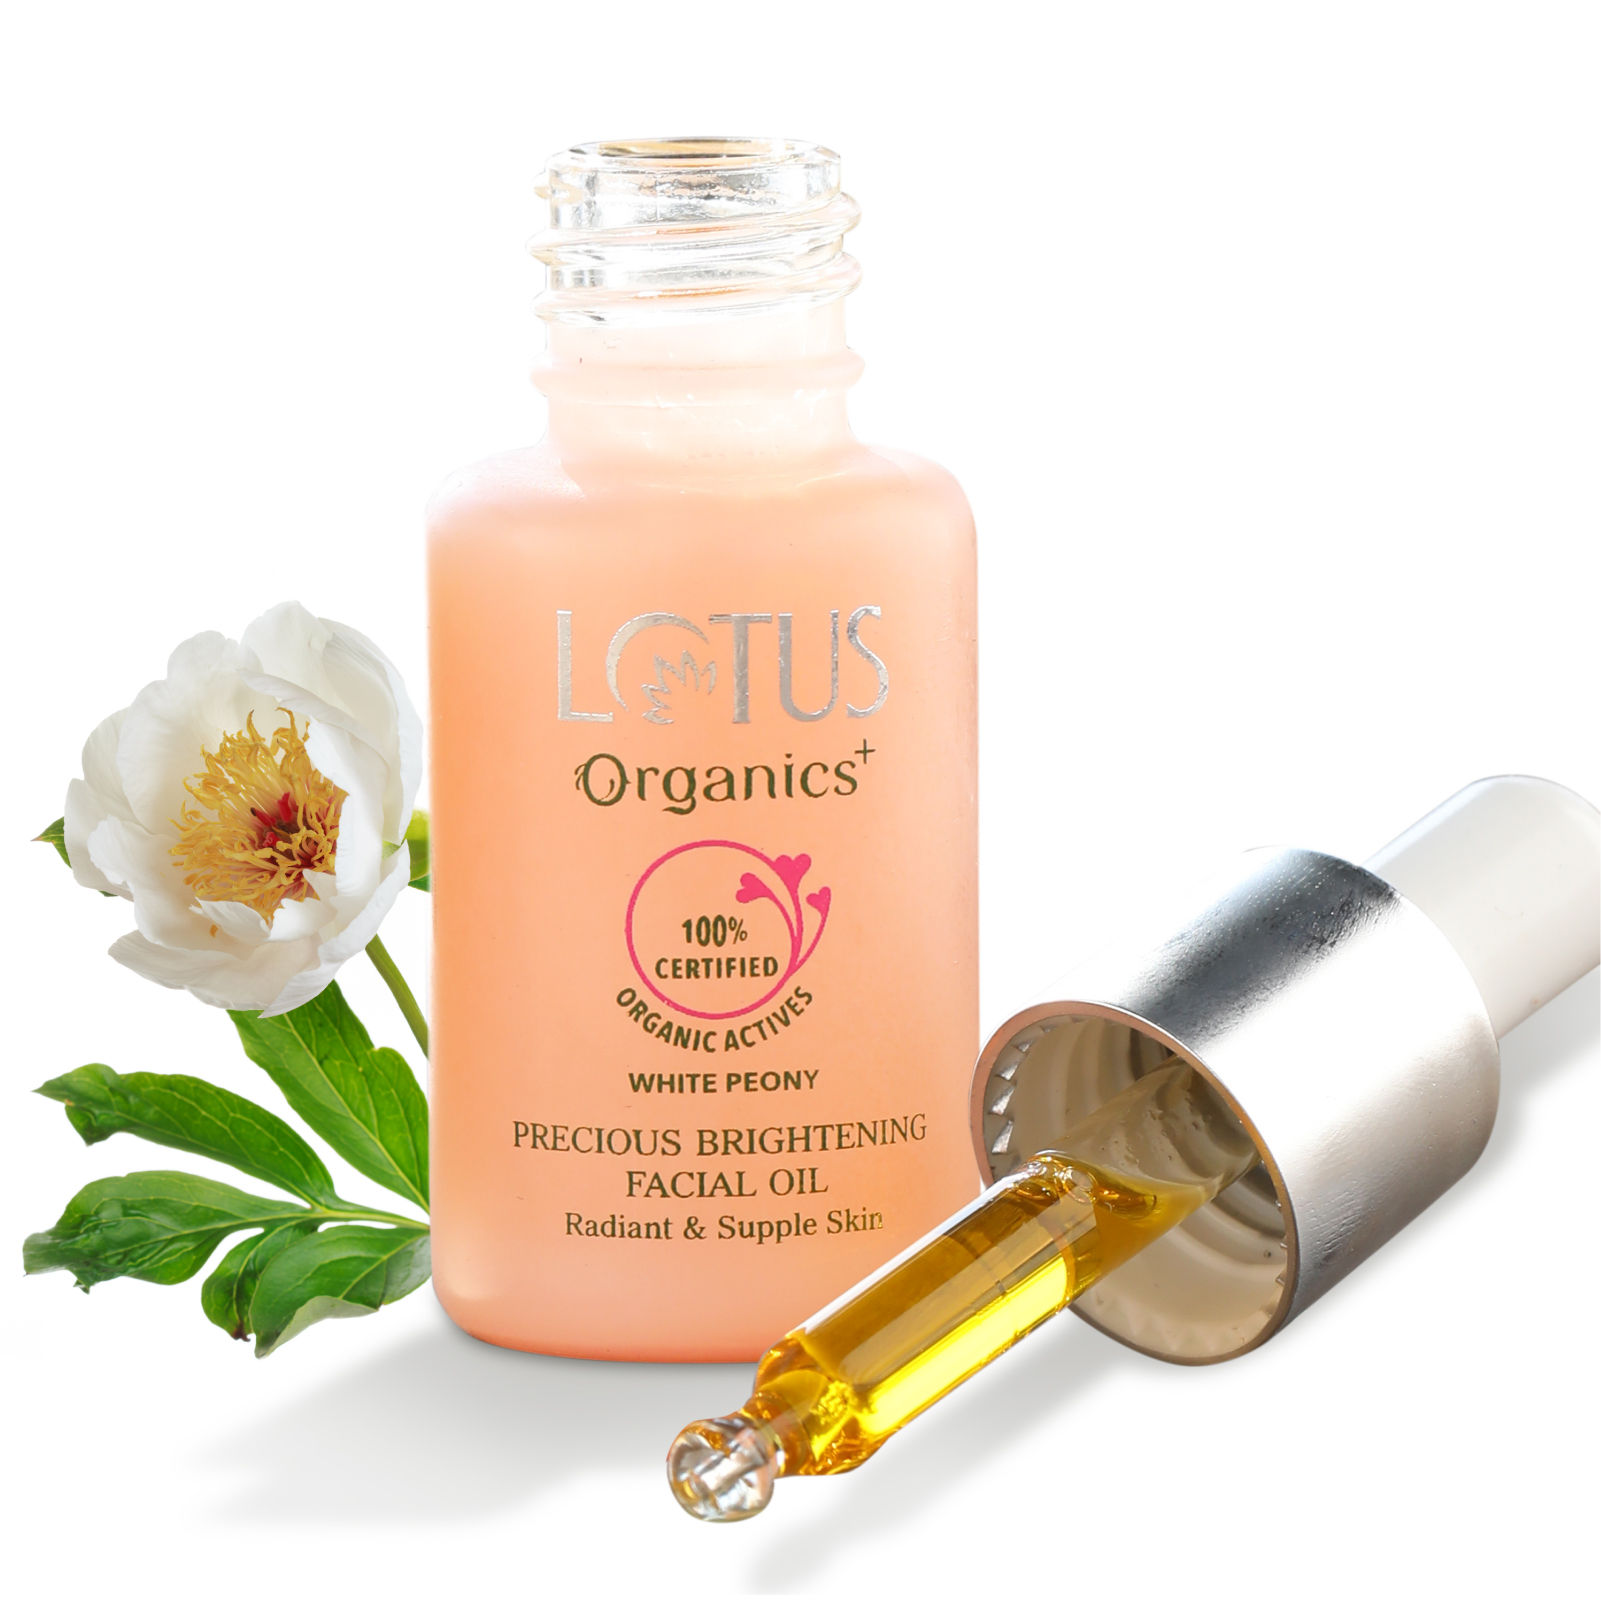 Lotus Organics+ Precious Brightening Facial Oil